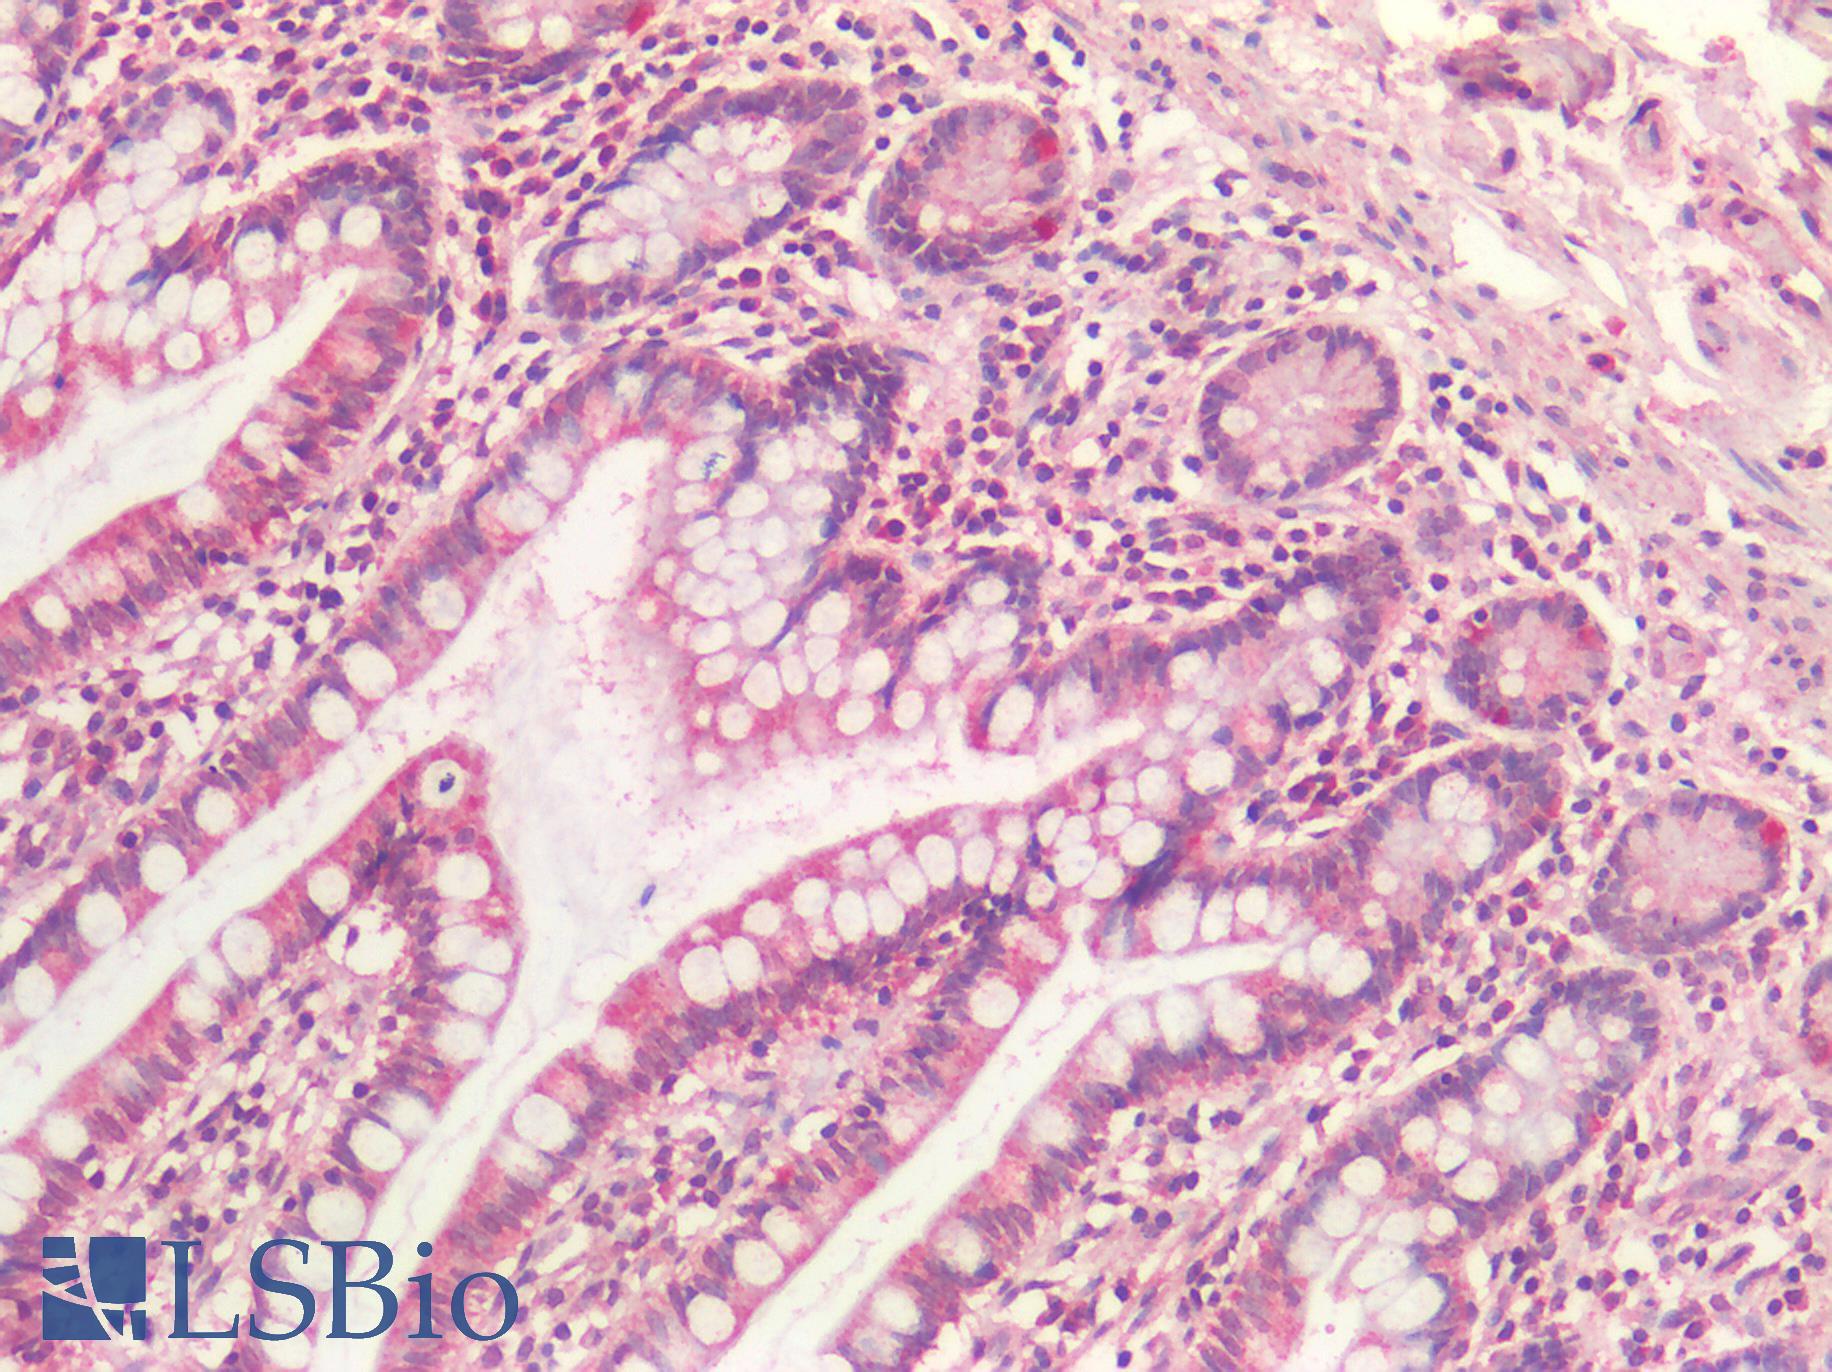 SDHB Antibody - Human Small Intestine: Formalin-Fixed, Paraffin-Embedded (FFPE)